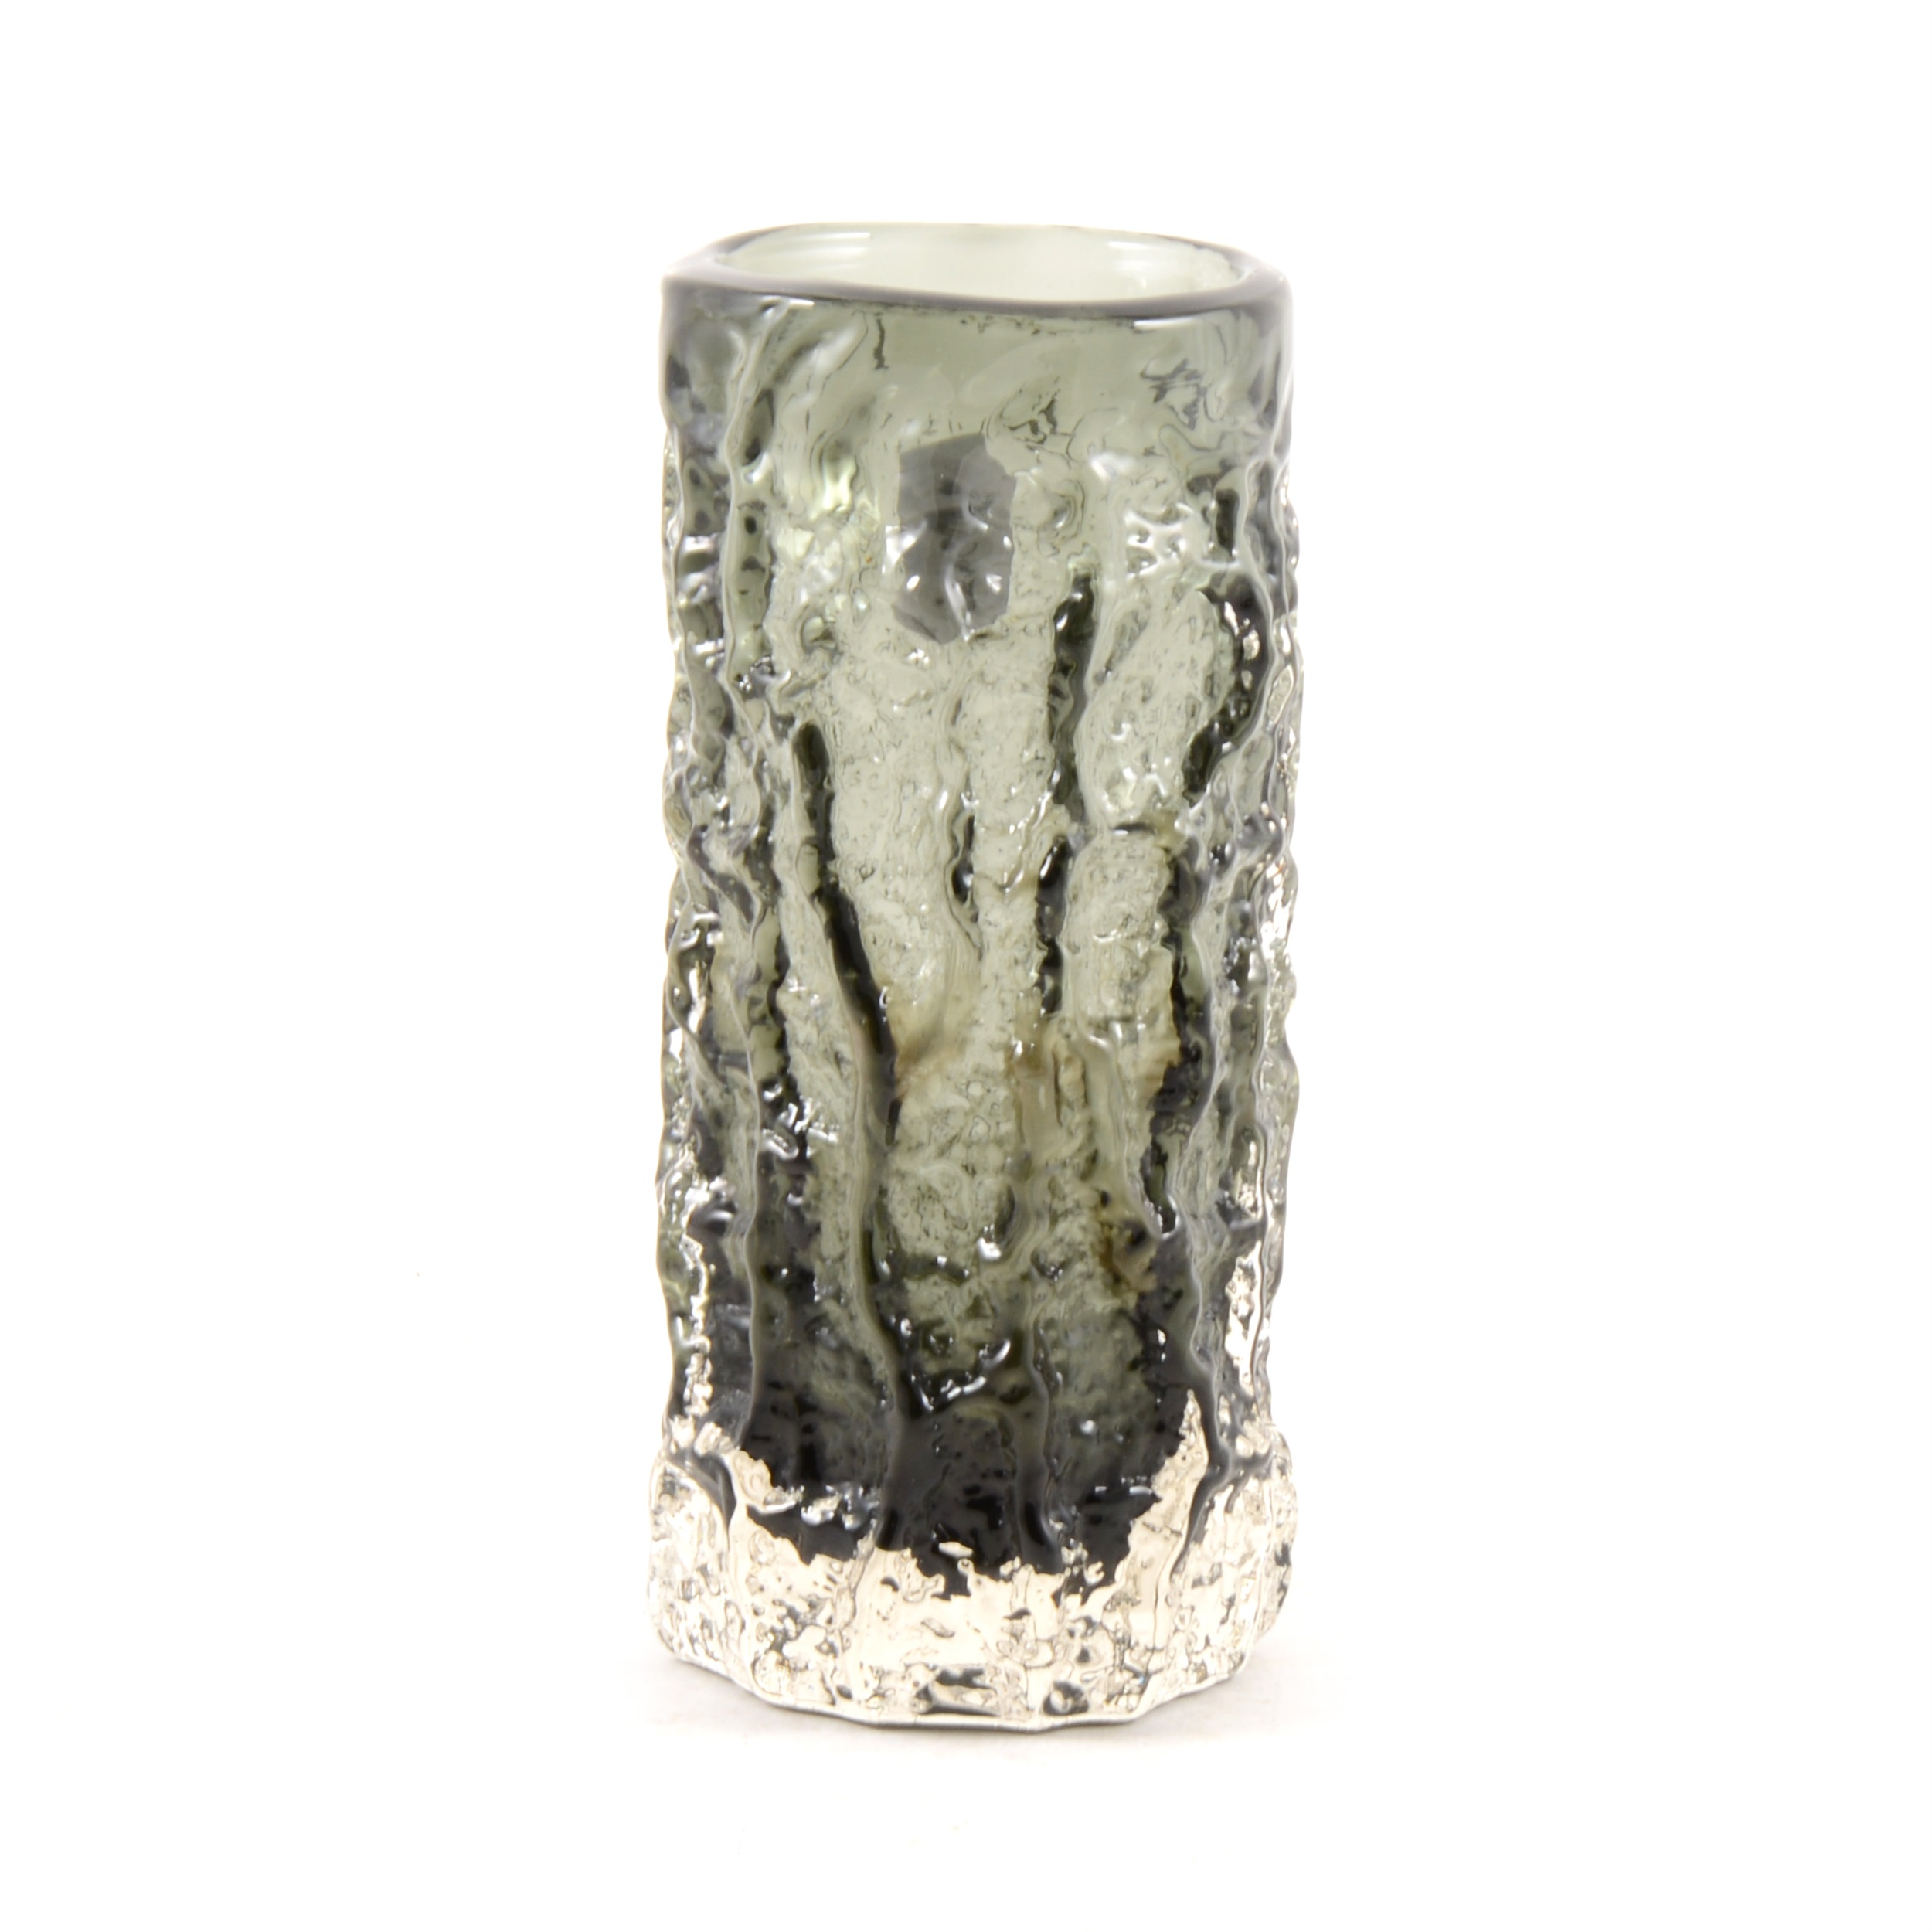 Whitefriars Textured Glass vase, bark effect, pewter colourway